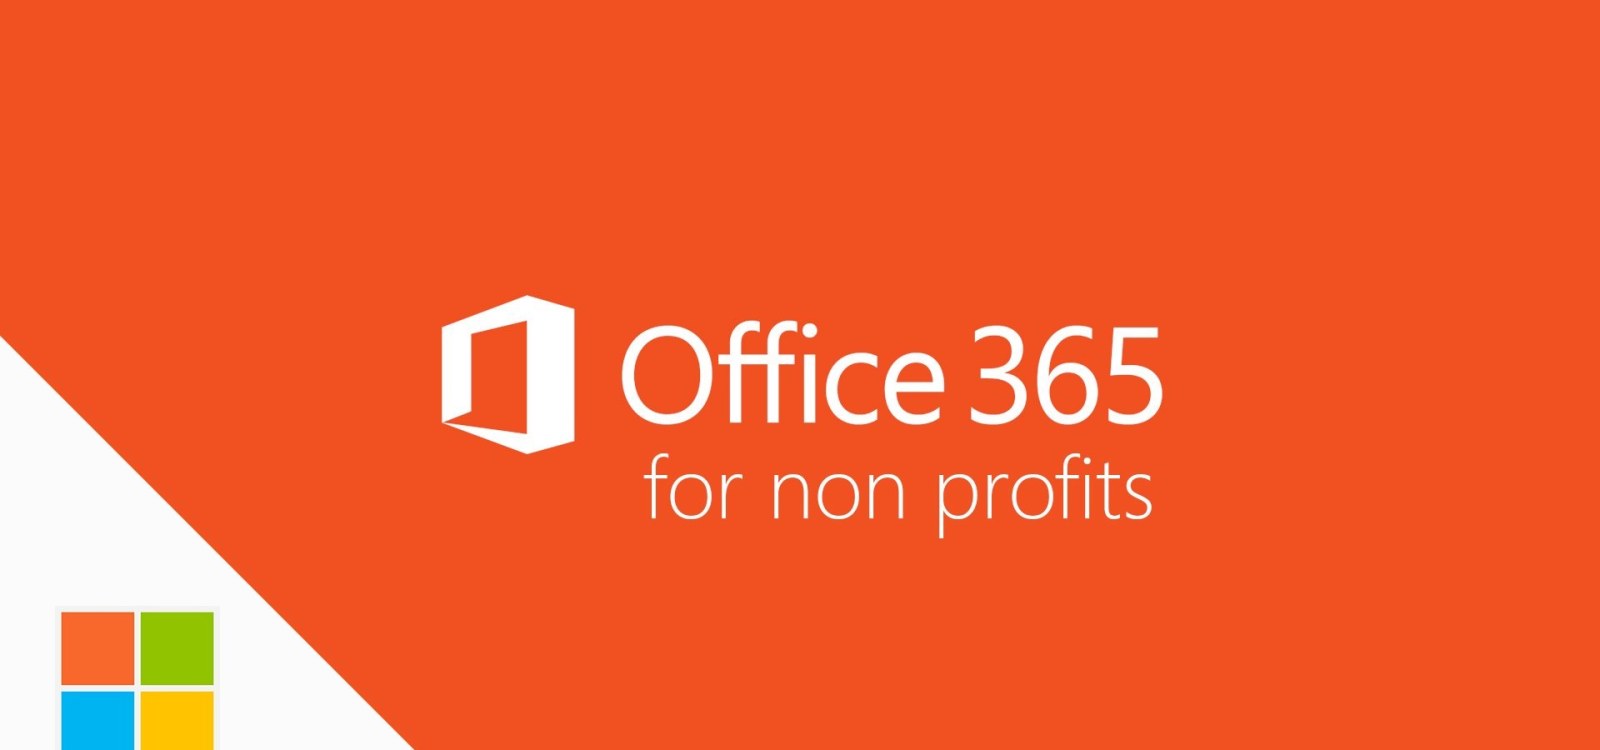 Comprar Office 365 Beneficencia | Office 365 para Beneficencia u ONGs